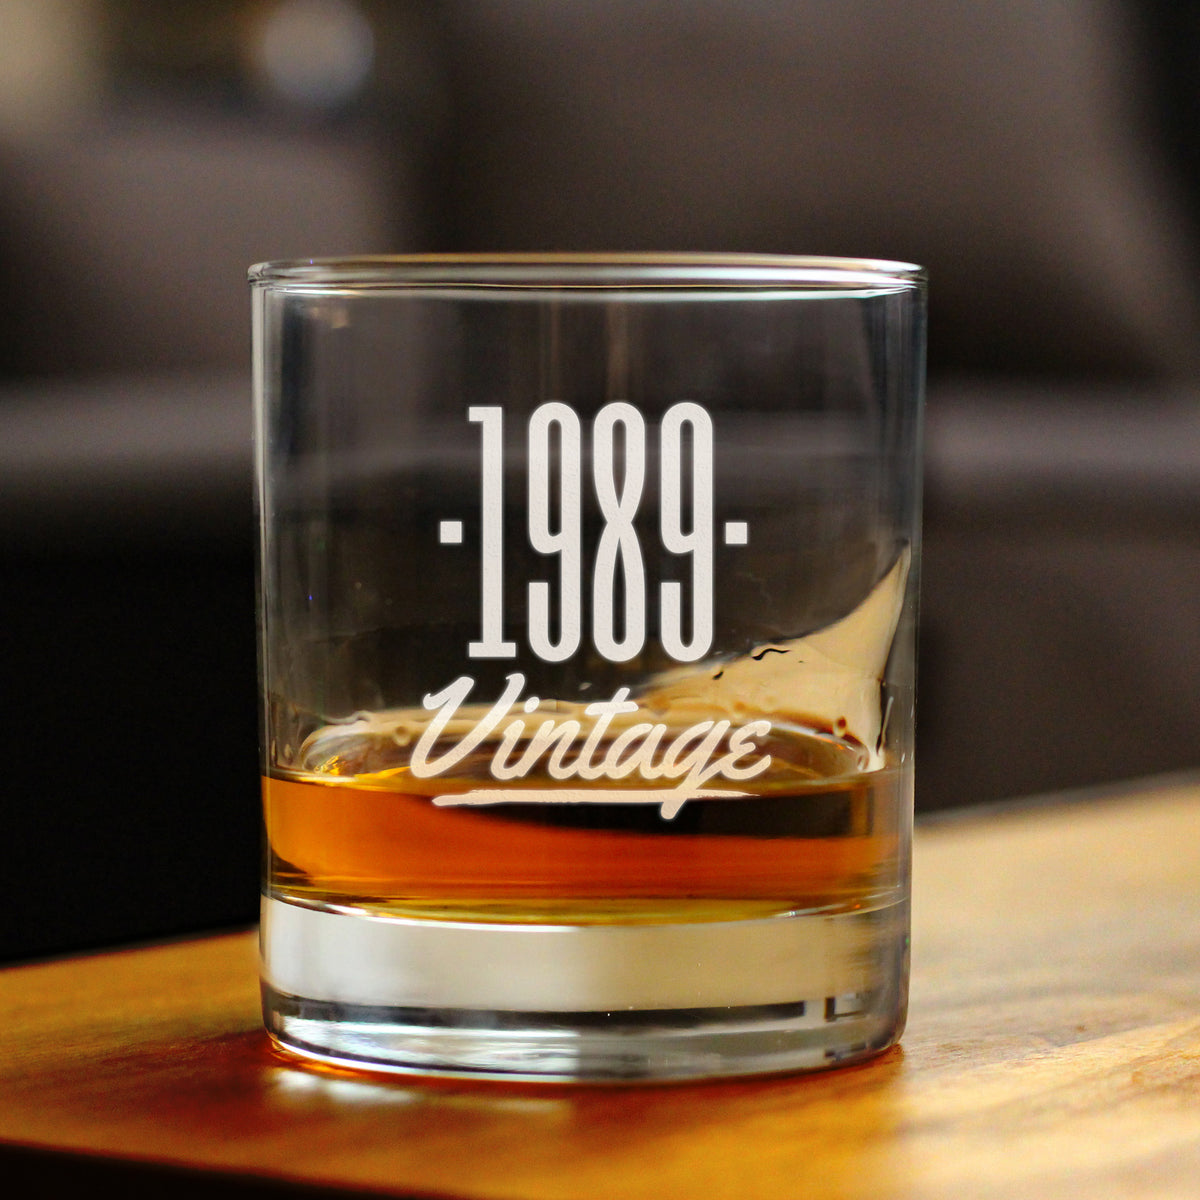 Vintage 1989 - Fun 35th Birthday Whiskey Rocks Glass Gifts for Men &amp; Women Turning 35 - Retro Whisky Drinking Tumbler